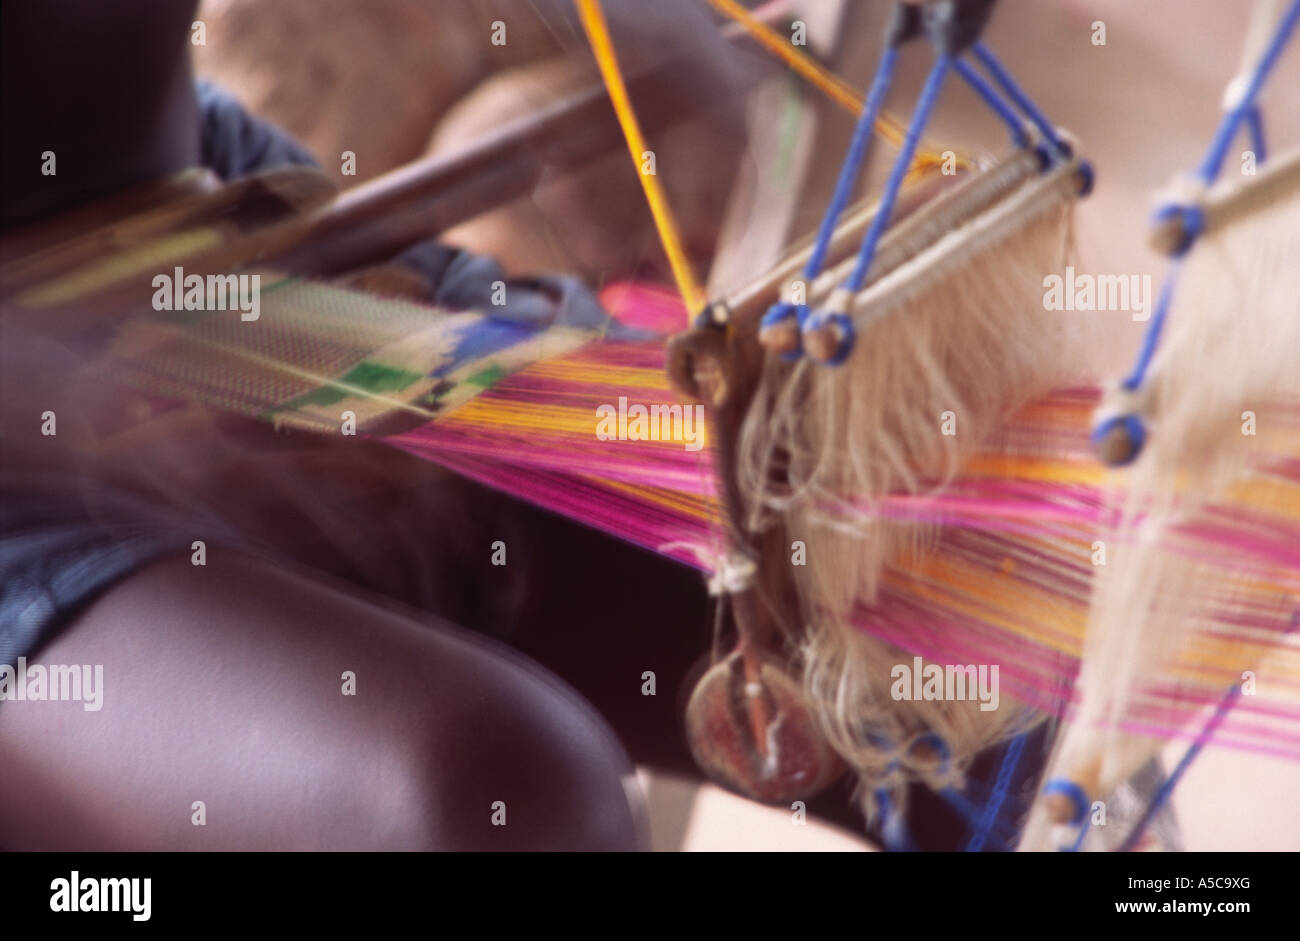 Photos and pictures of: Kente cloth weaving, Kumasi, Ashanti